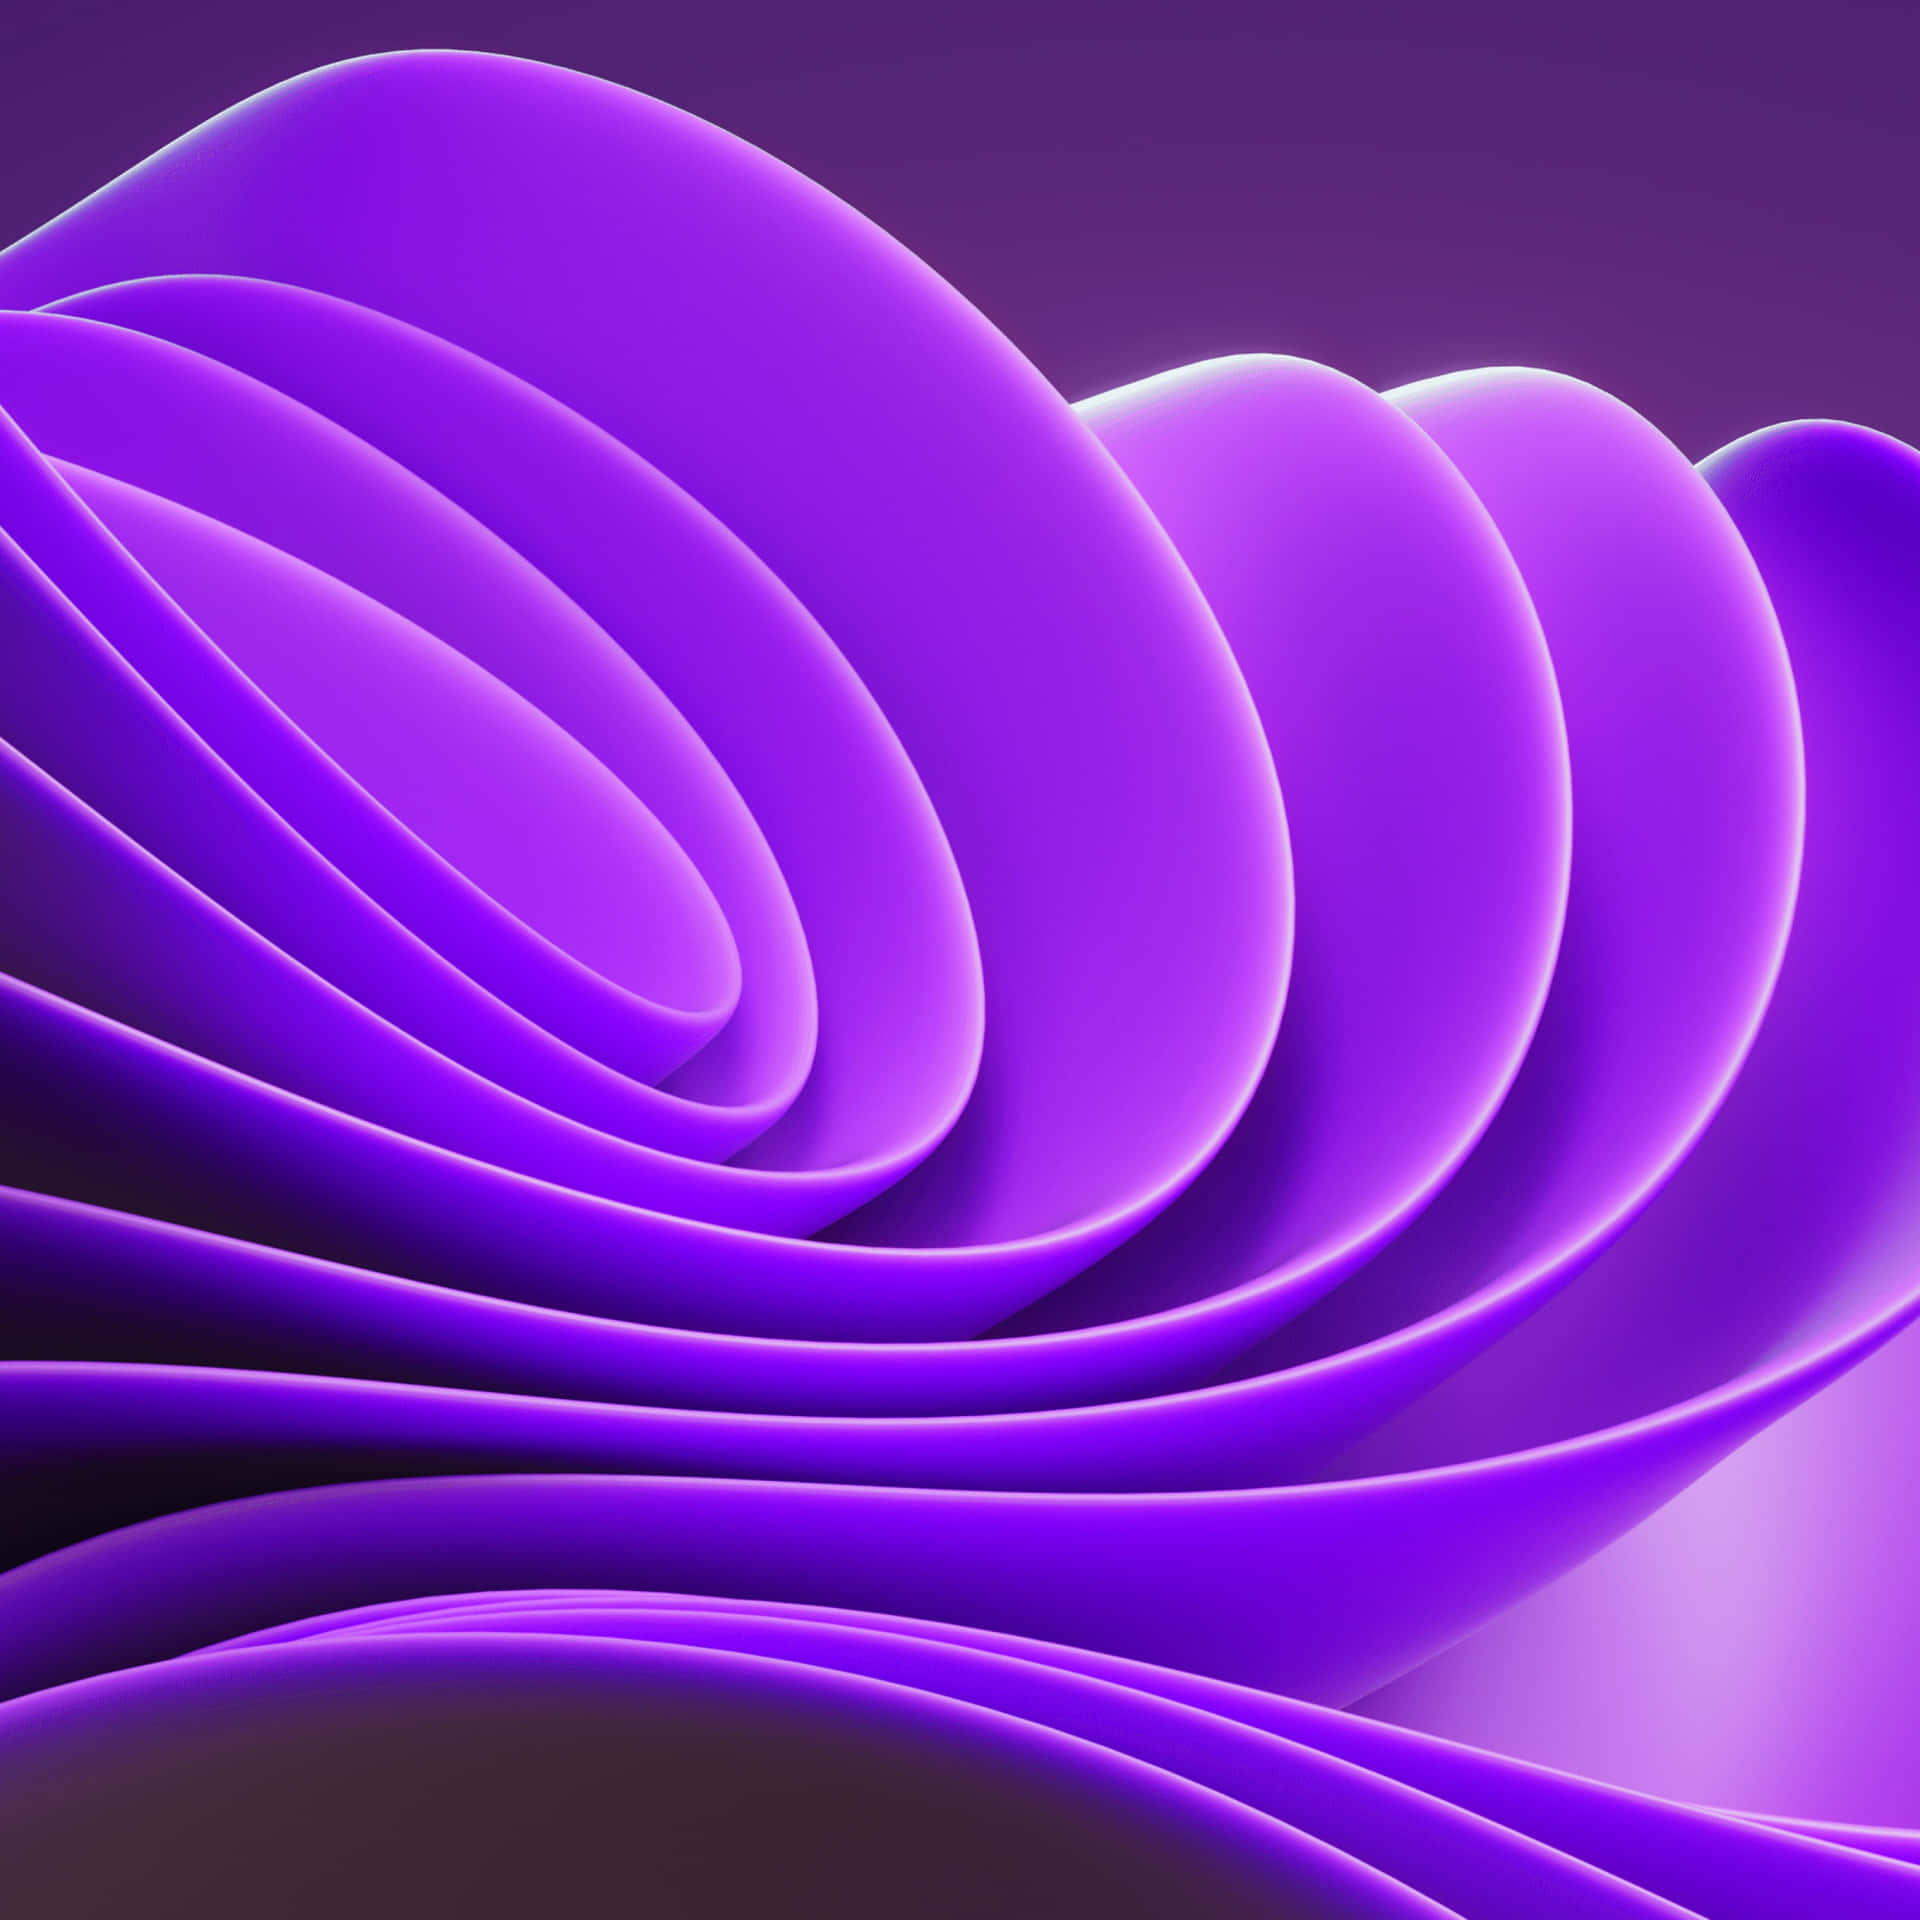 Spellbinding Abstract Art in Radiant Shades Of Purple Wallpaper